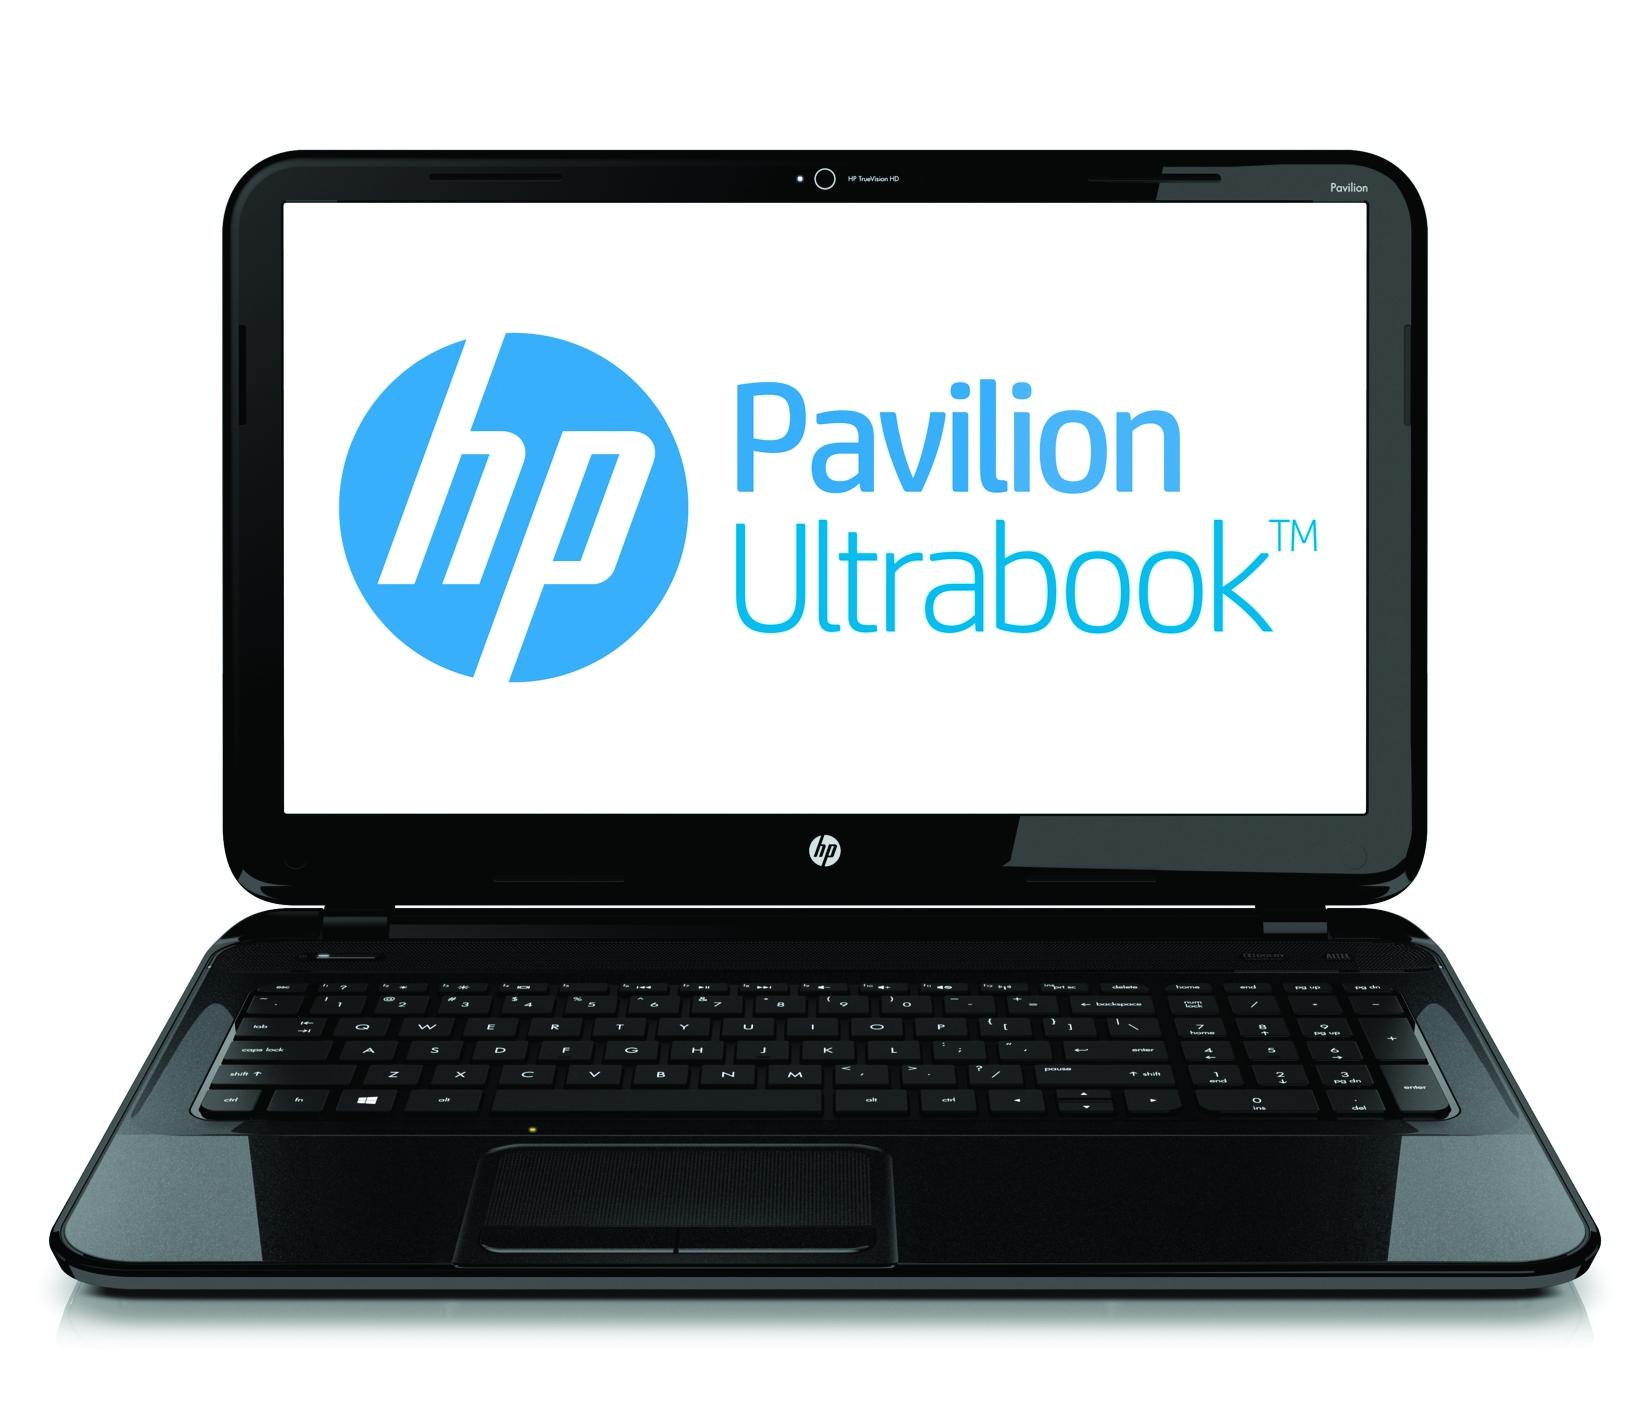 HP Pavilion Sleekbook 15-b020sw